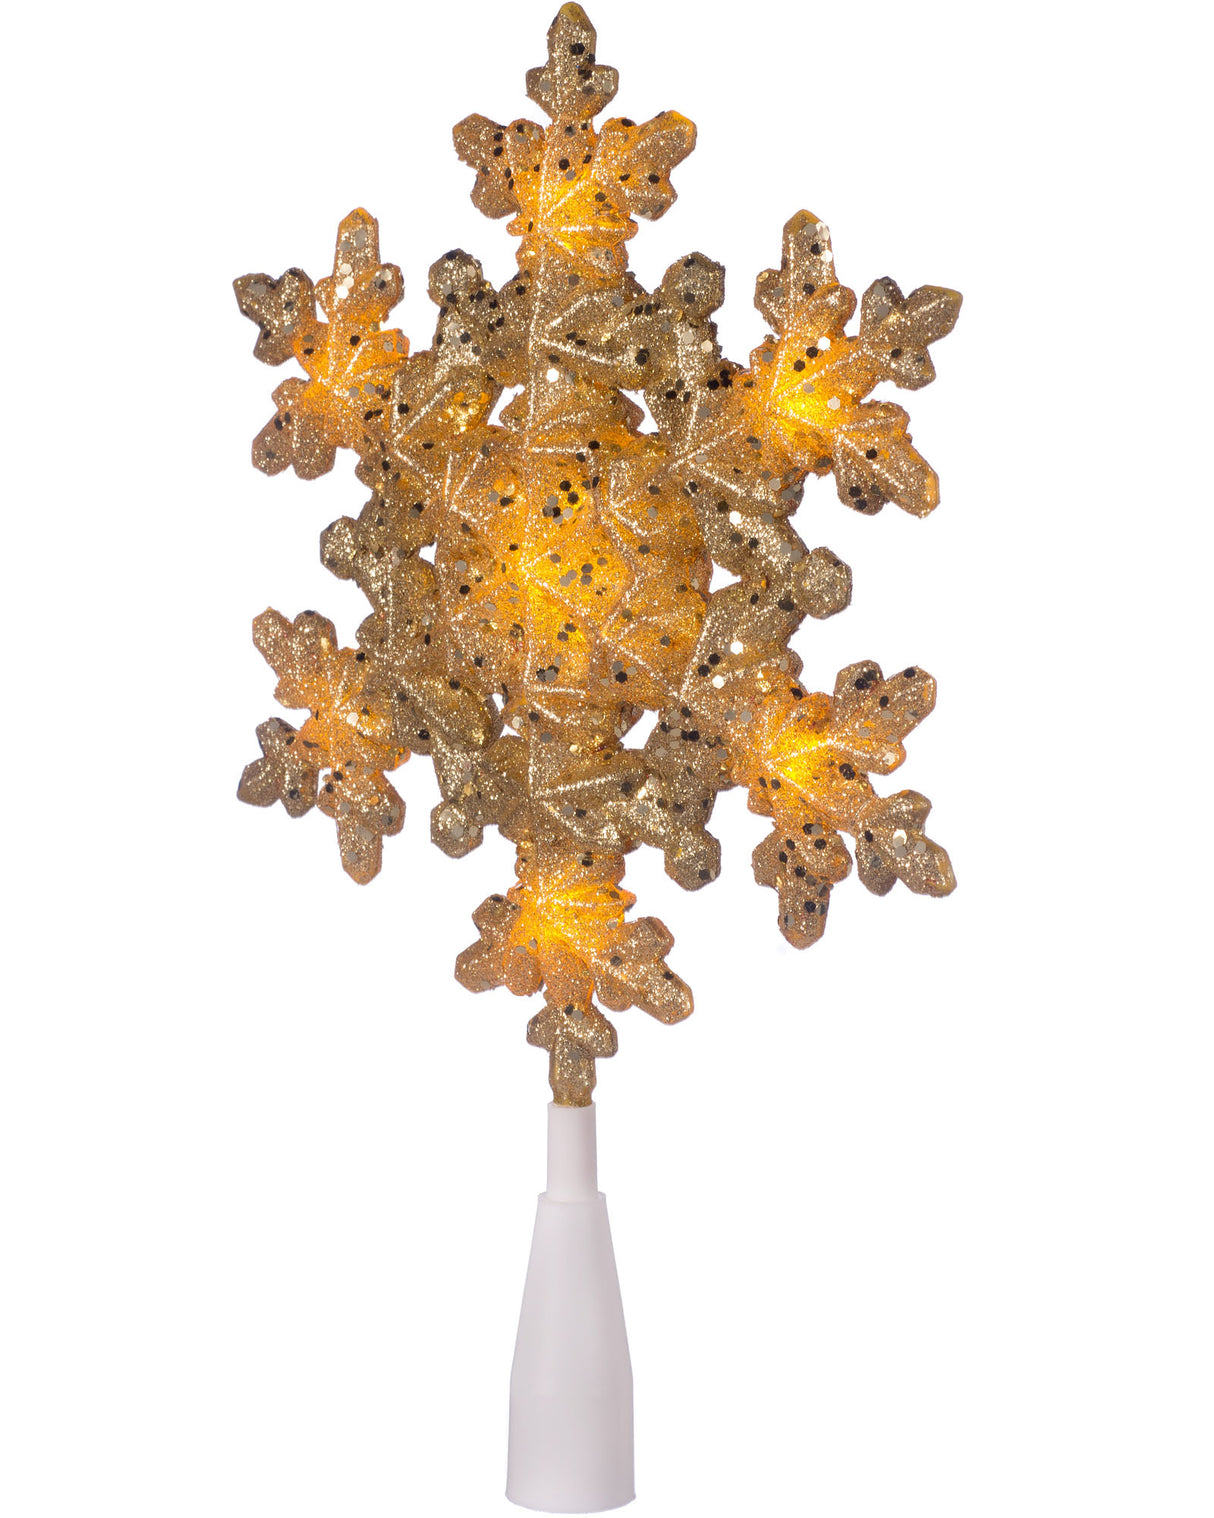 Pre-Lit Snowflake Christmas Tree Topper, Gold, 29 cm